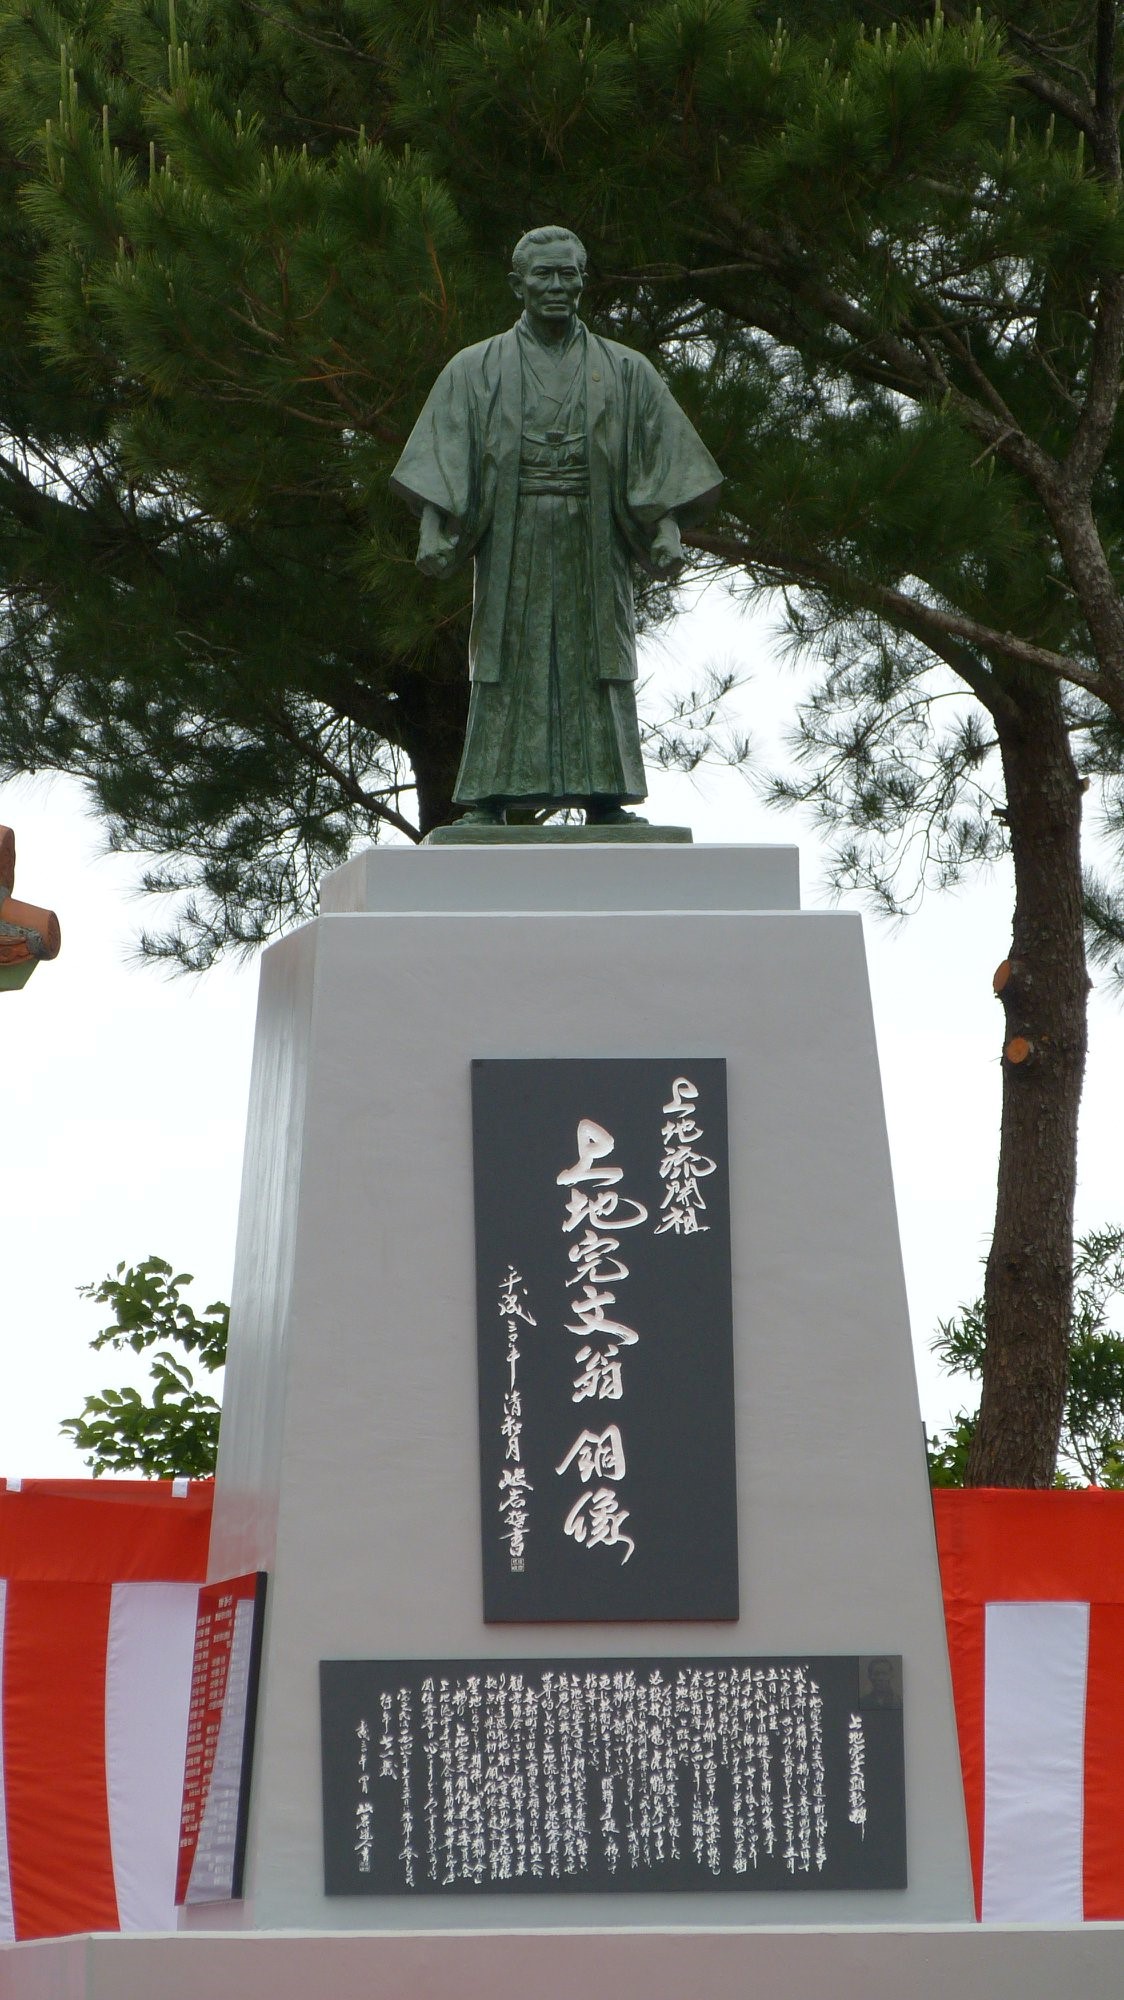 Legend of Okinawan Karate